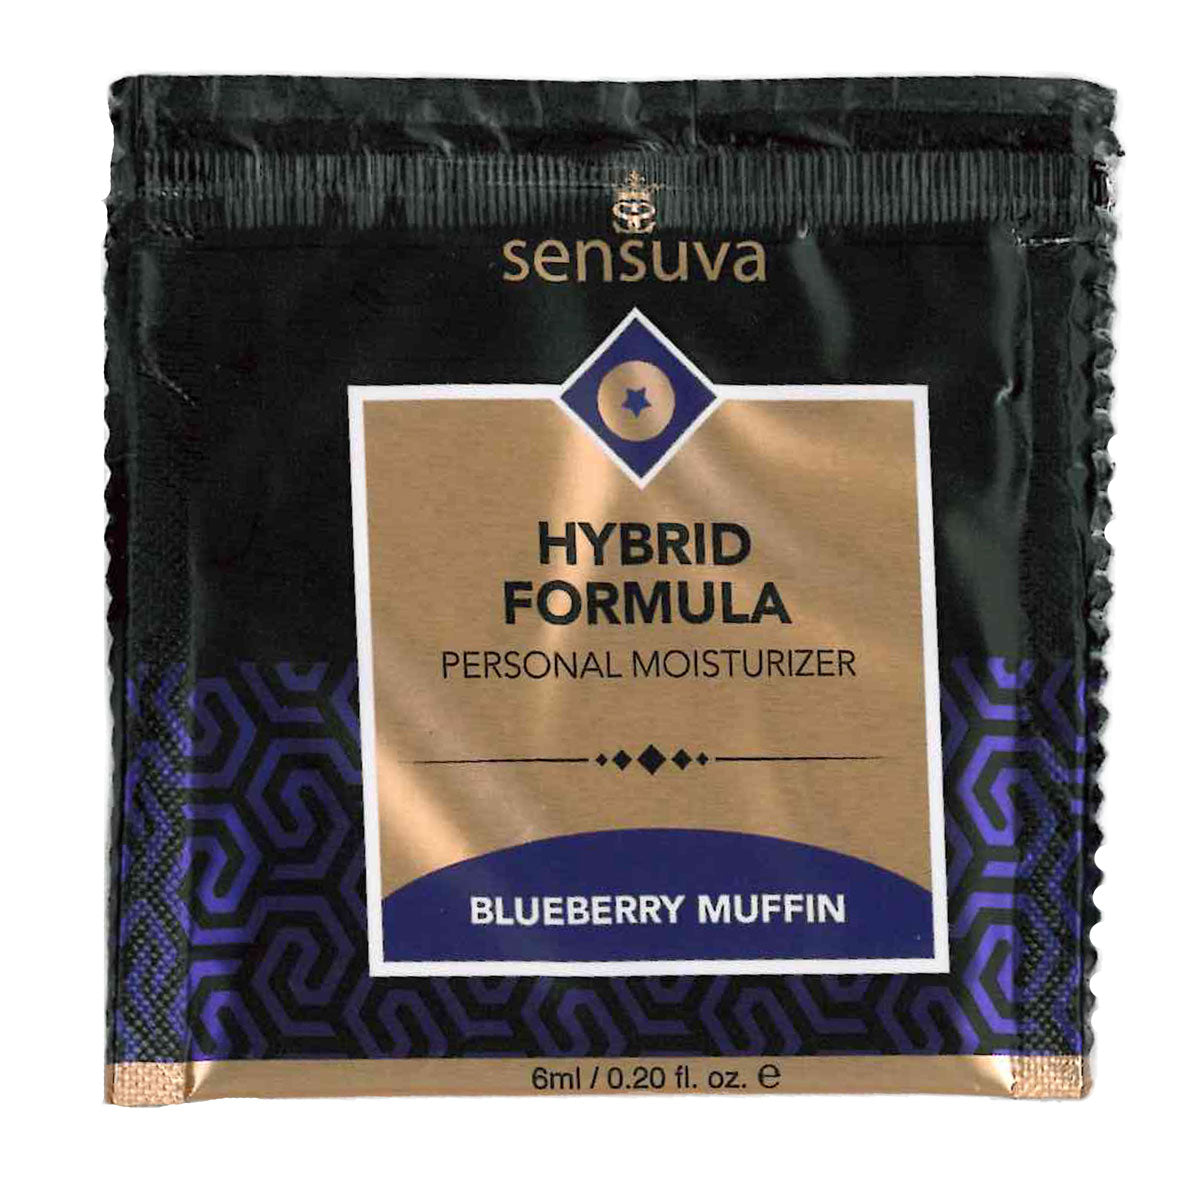 Sensuva – Hybrid Formula Personal Moisturizer - Blueberry Muffin - Foil 6ml/0.20 fl oz.